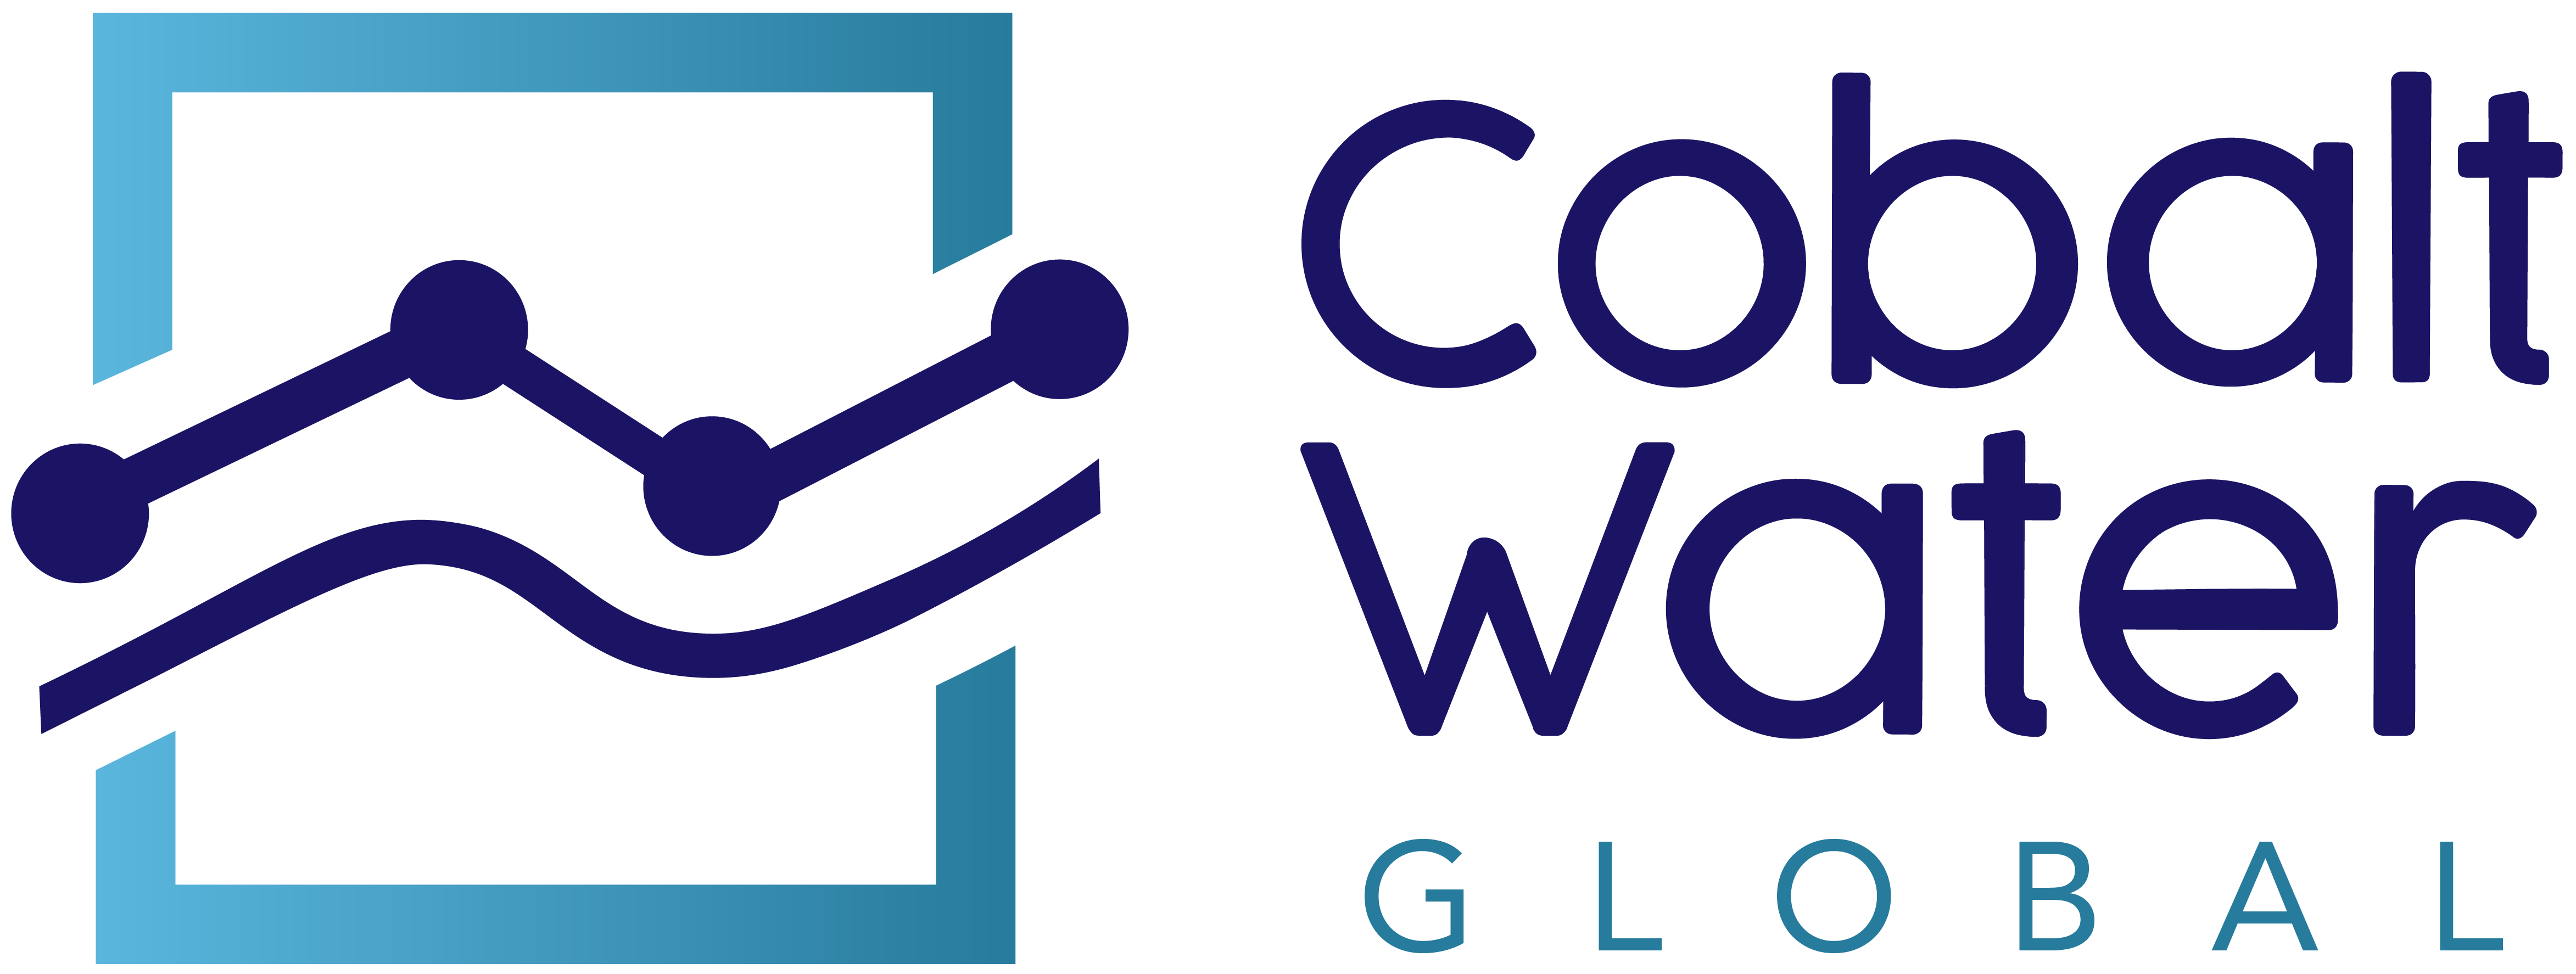 Cobalt Water Global